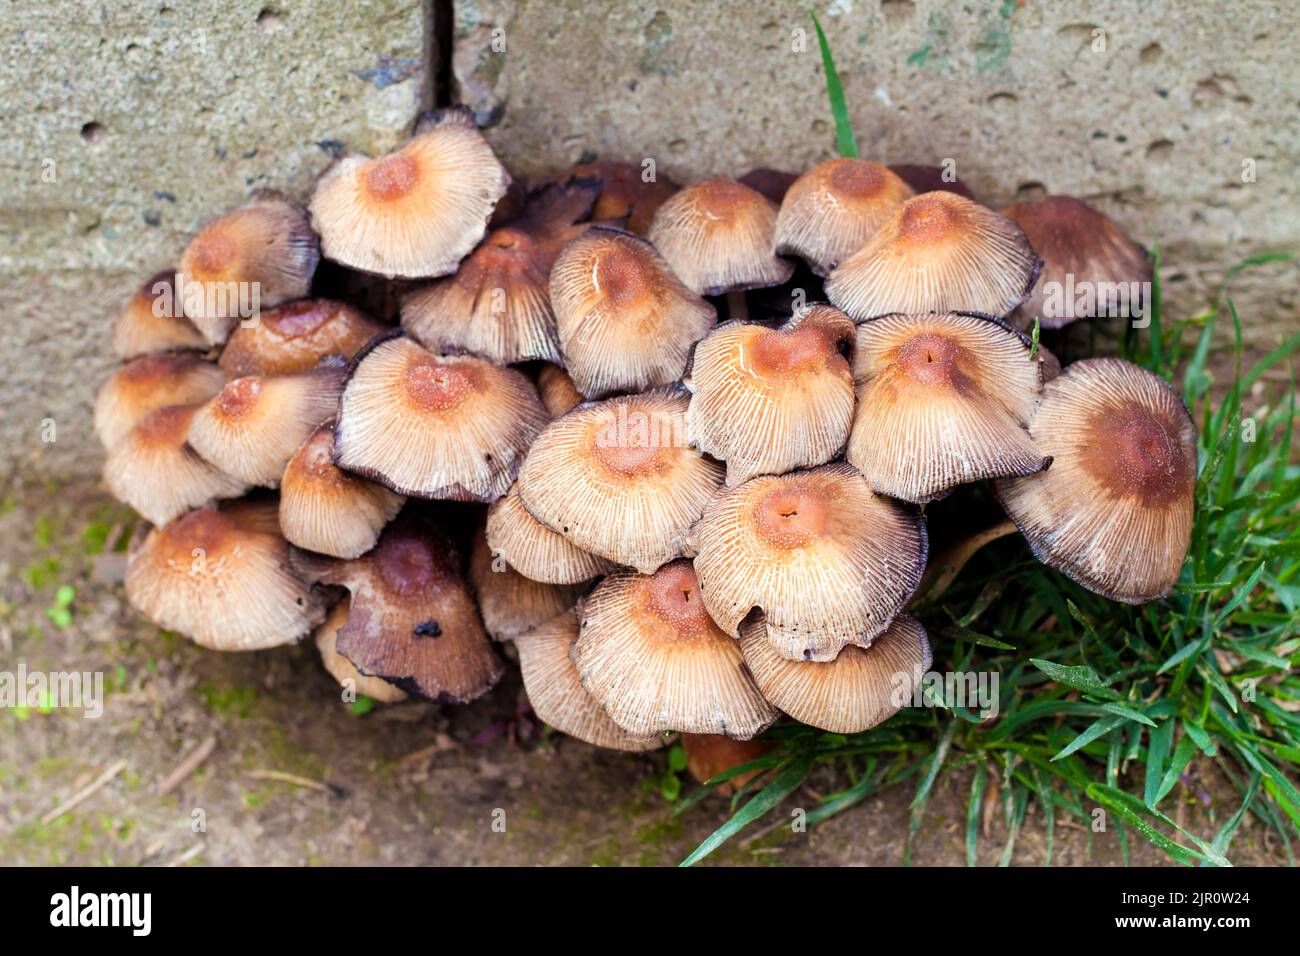 Fruit bodies of Glistening Inkcap Mushroom (Coprinellus micaceus) near concrete wall Stock Photo